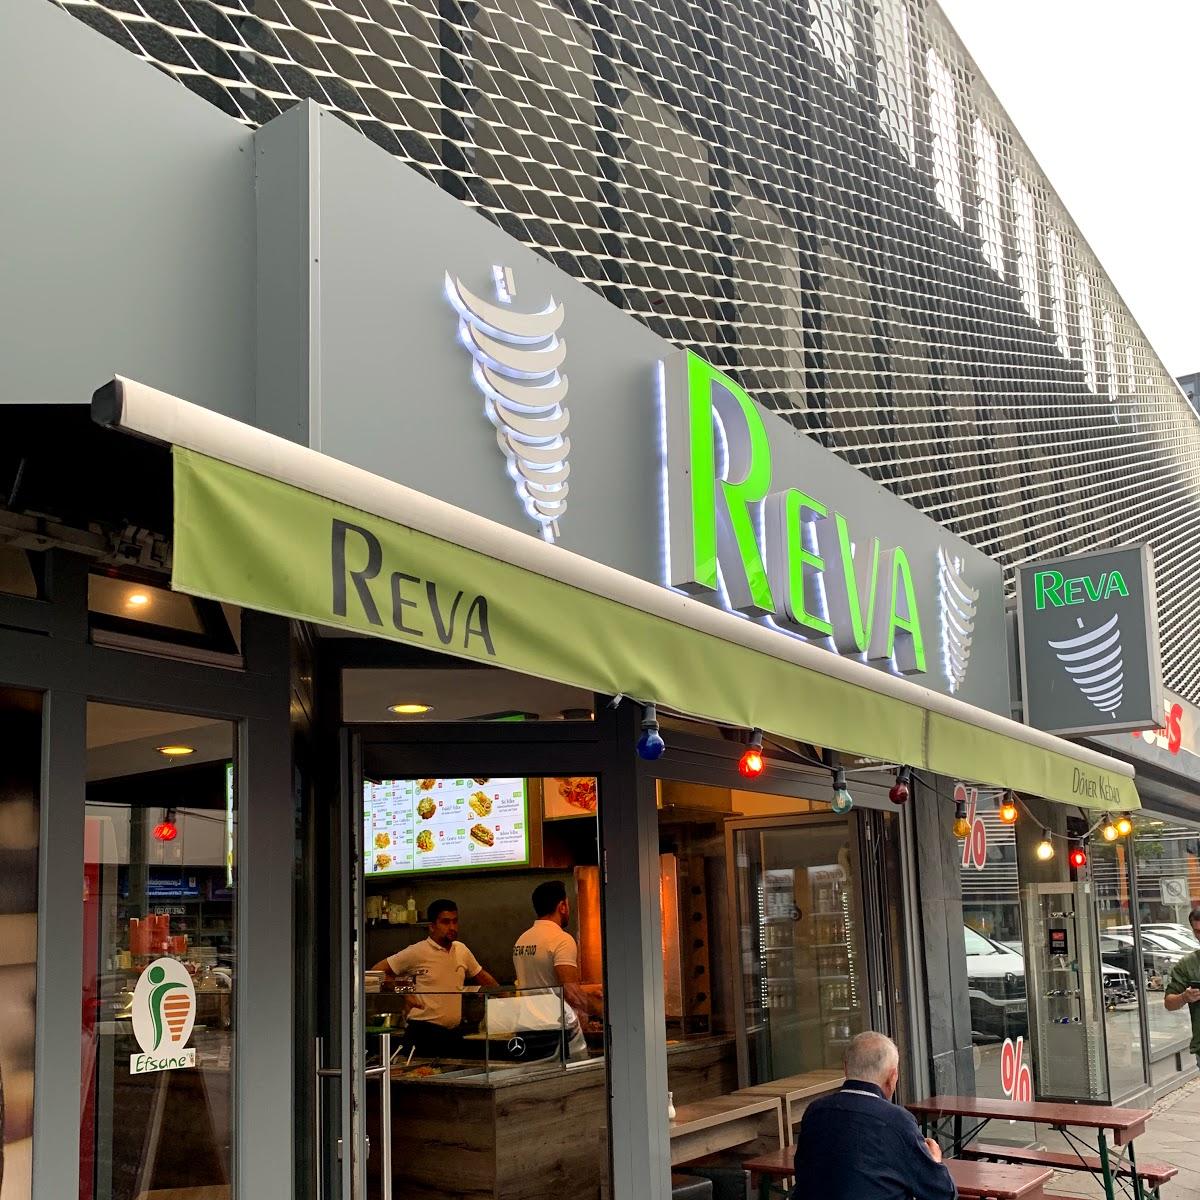 Restaurant "Reva" in Berlin